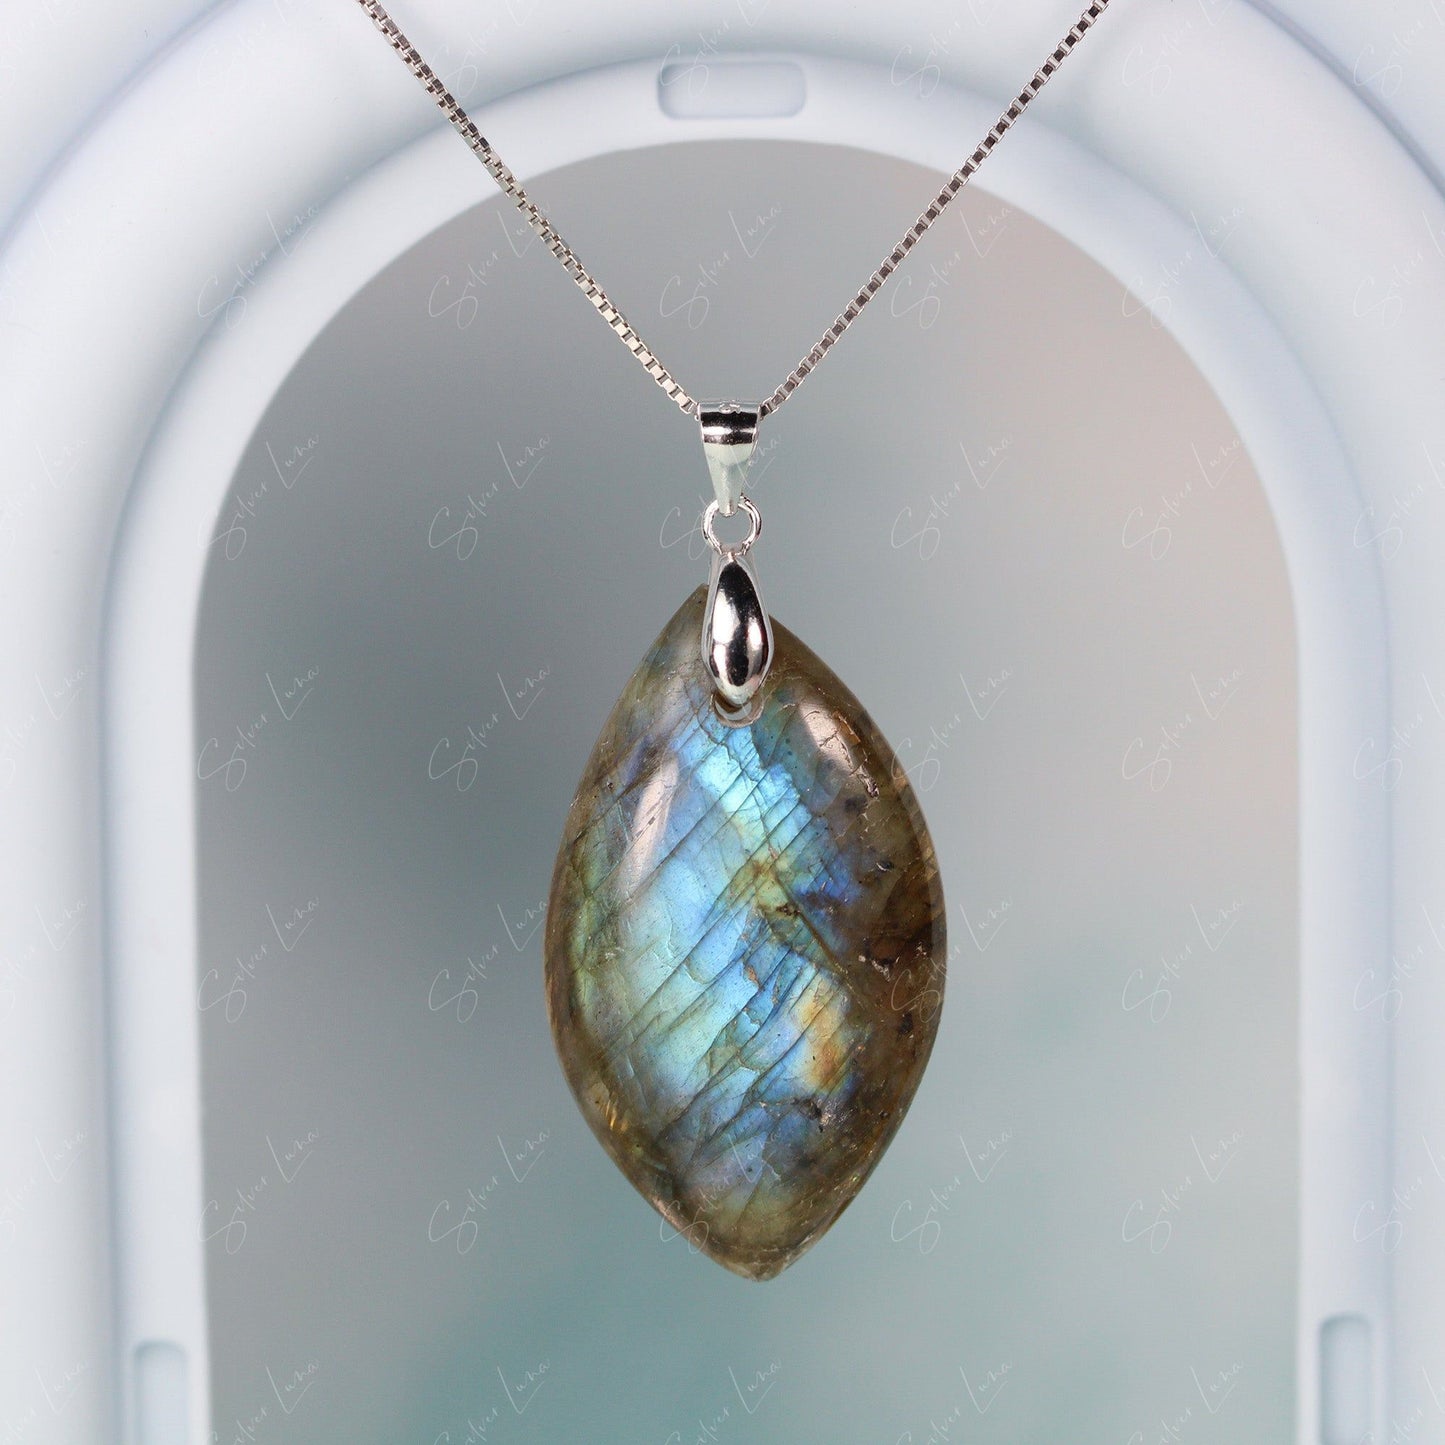 Labradorite sterling silver pendant necklace